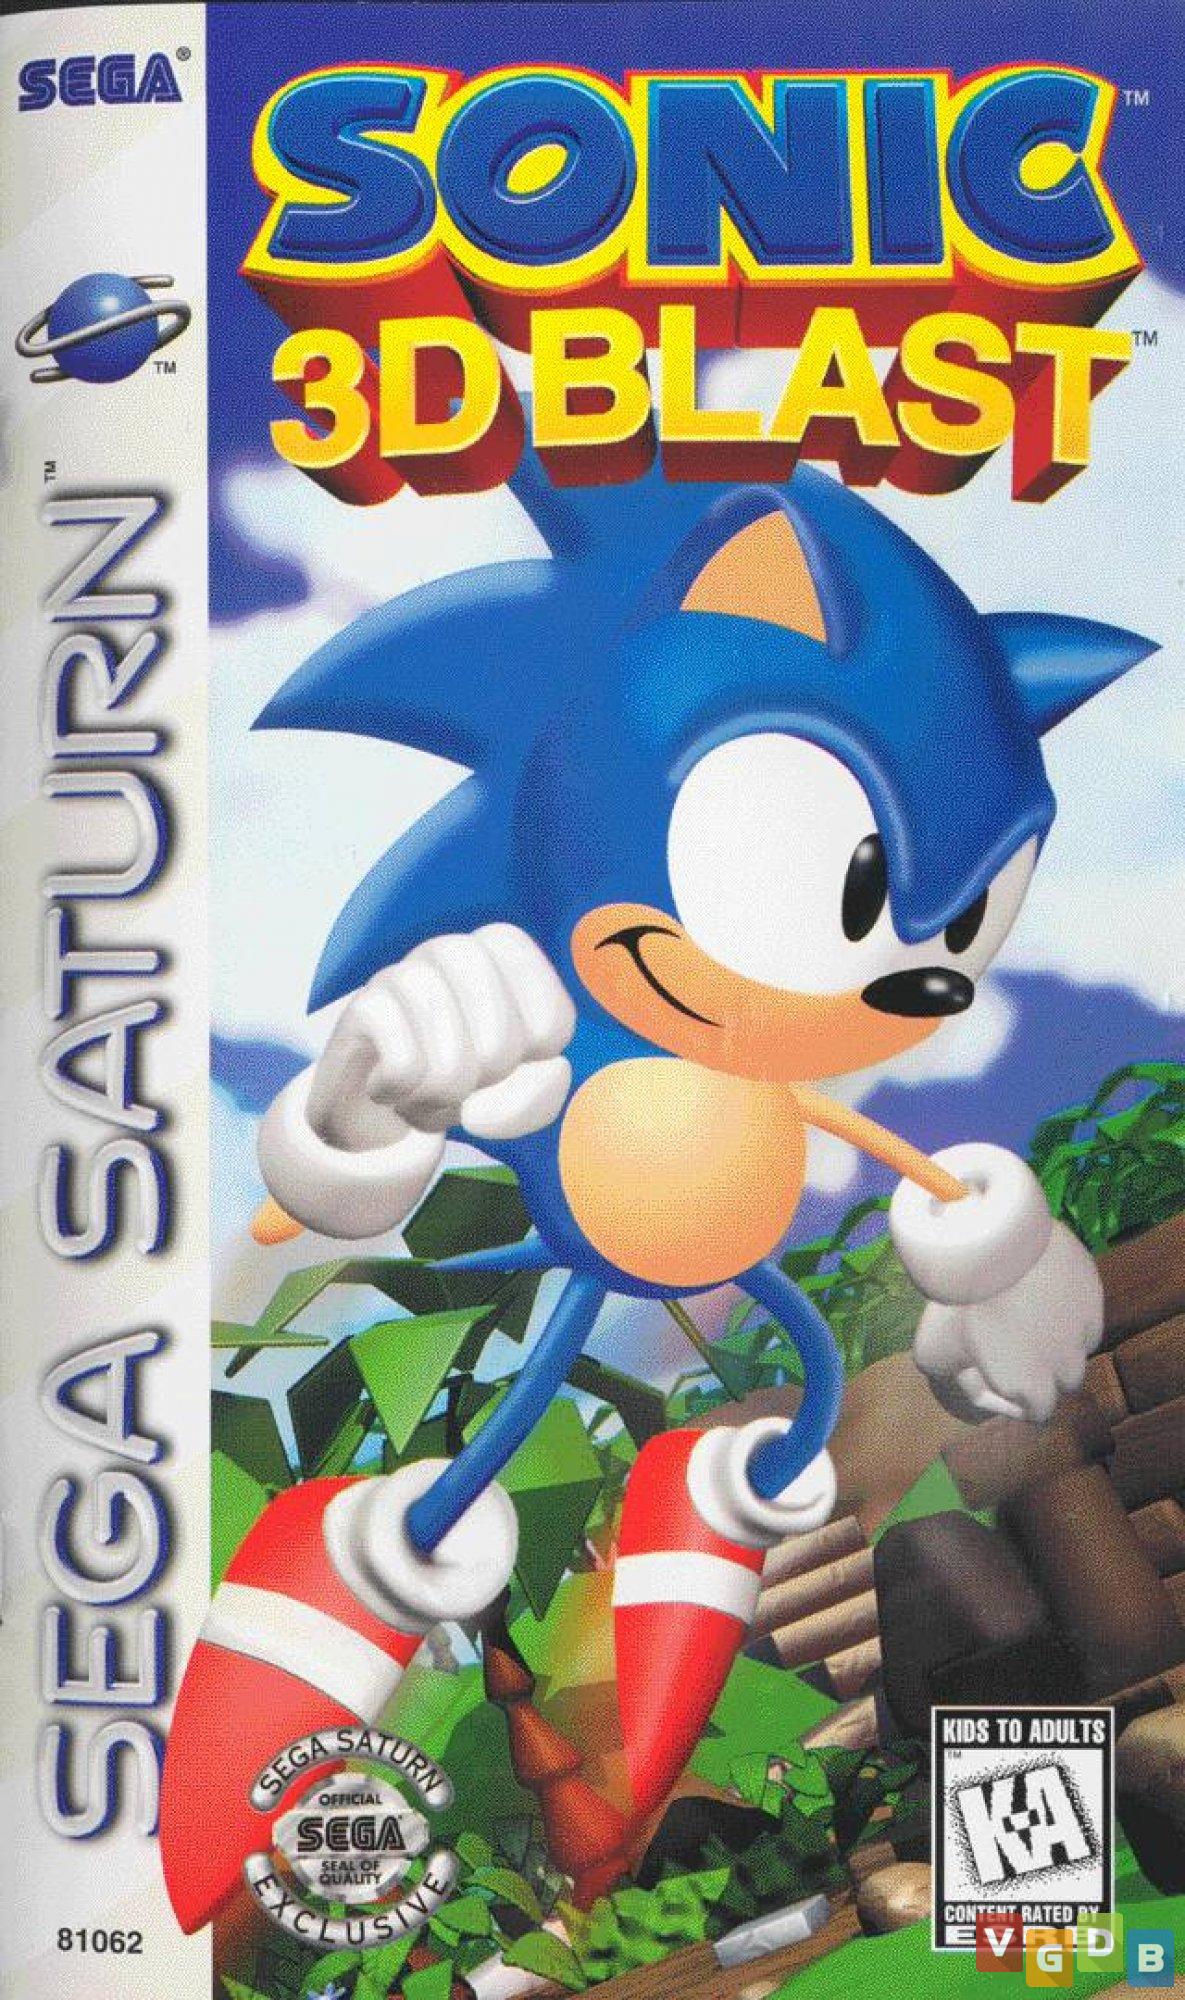 Jogo Sonic 3D Blast - Mega Drive - Sebo dos Games - 10 anos!